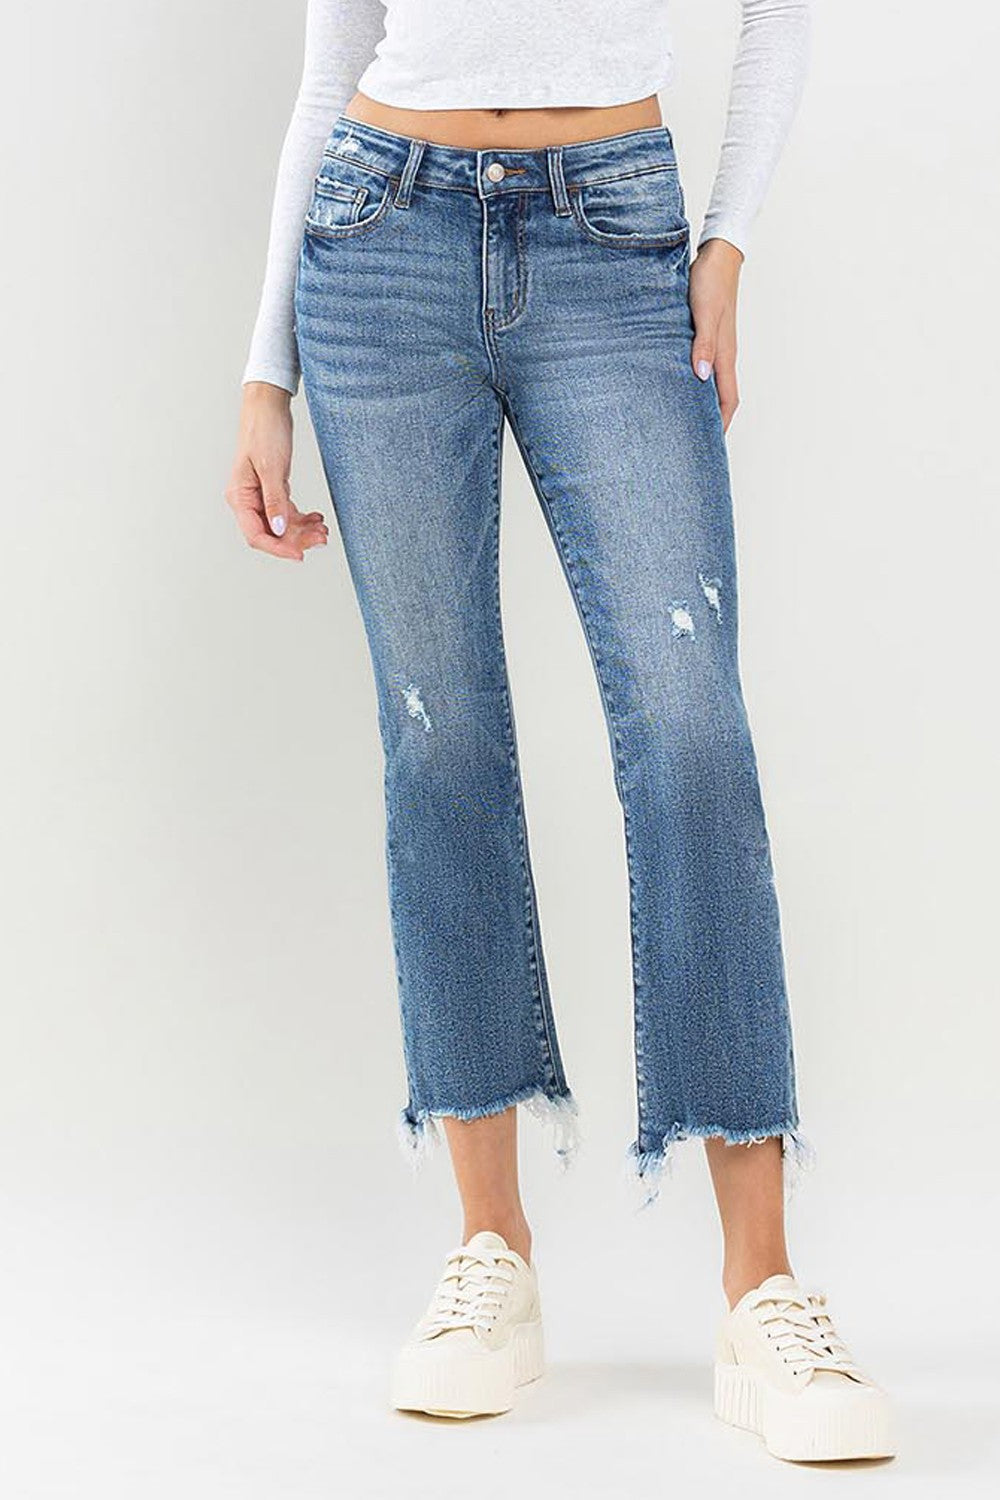 Lovervet Mid Rise Frayed Hem Jeans - Babbazon new